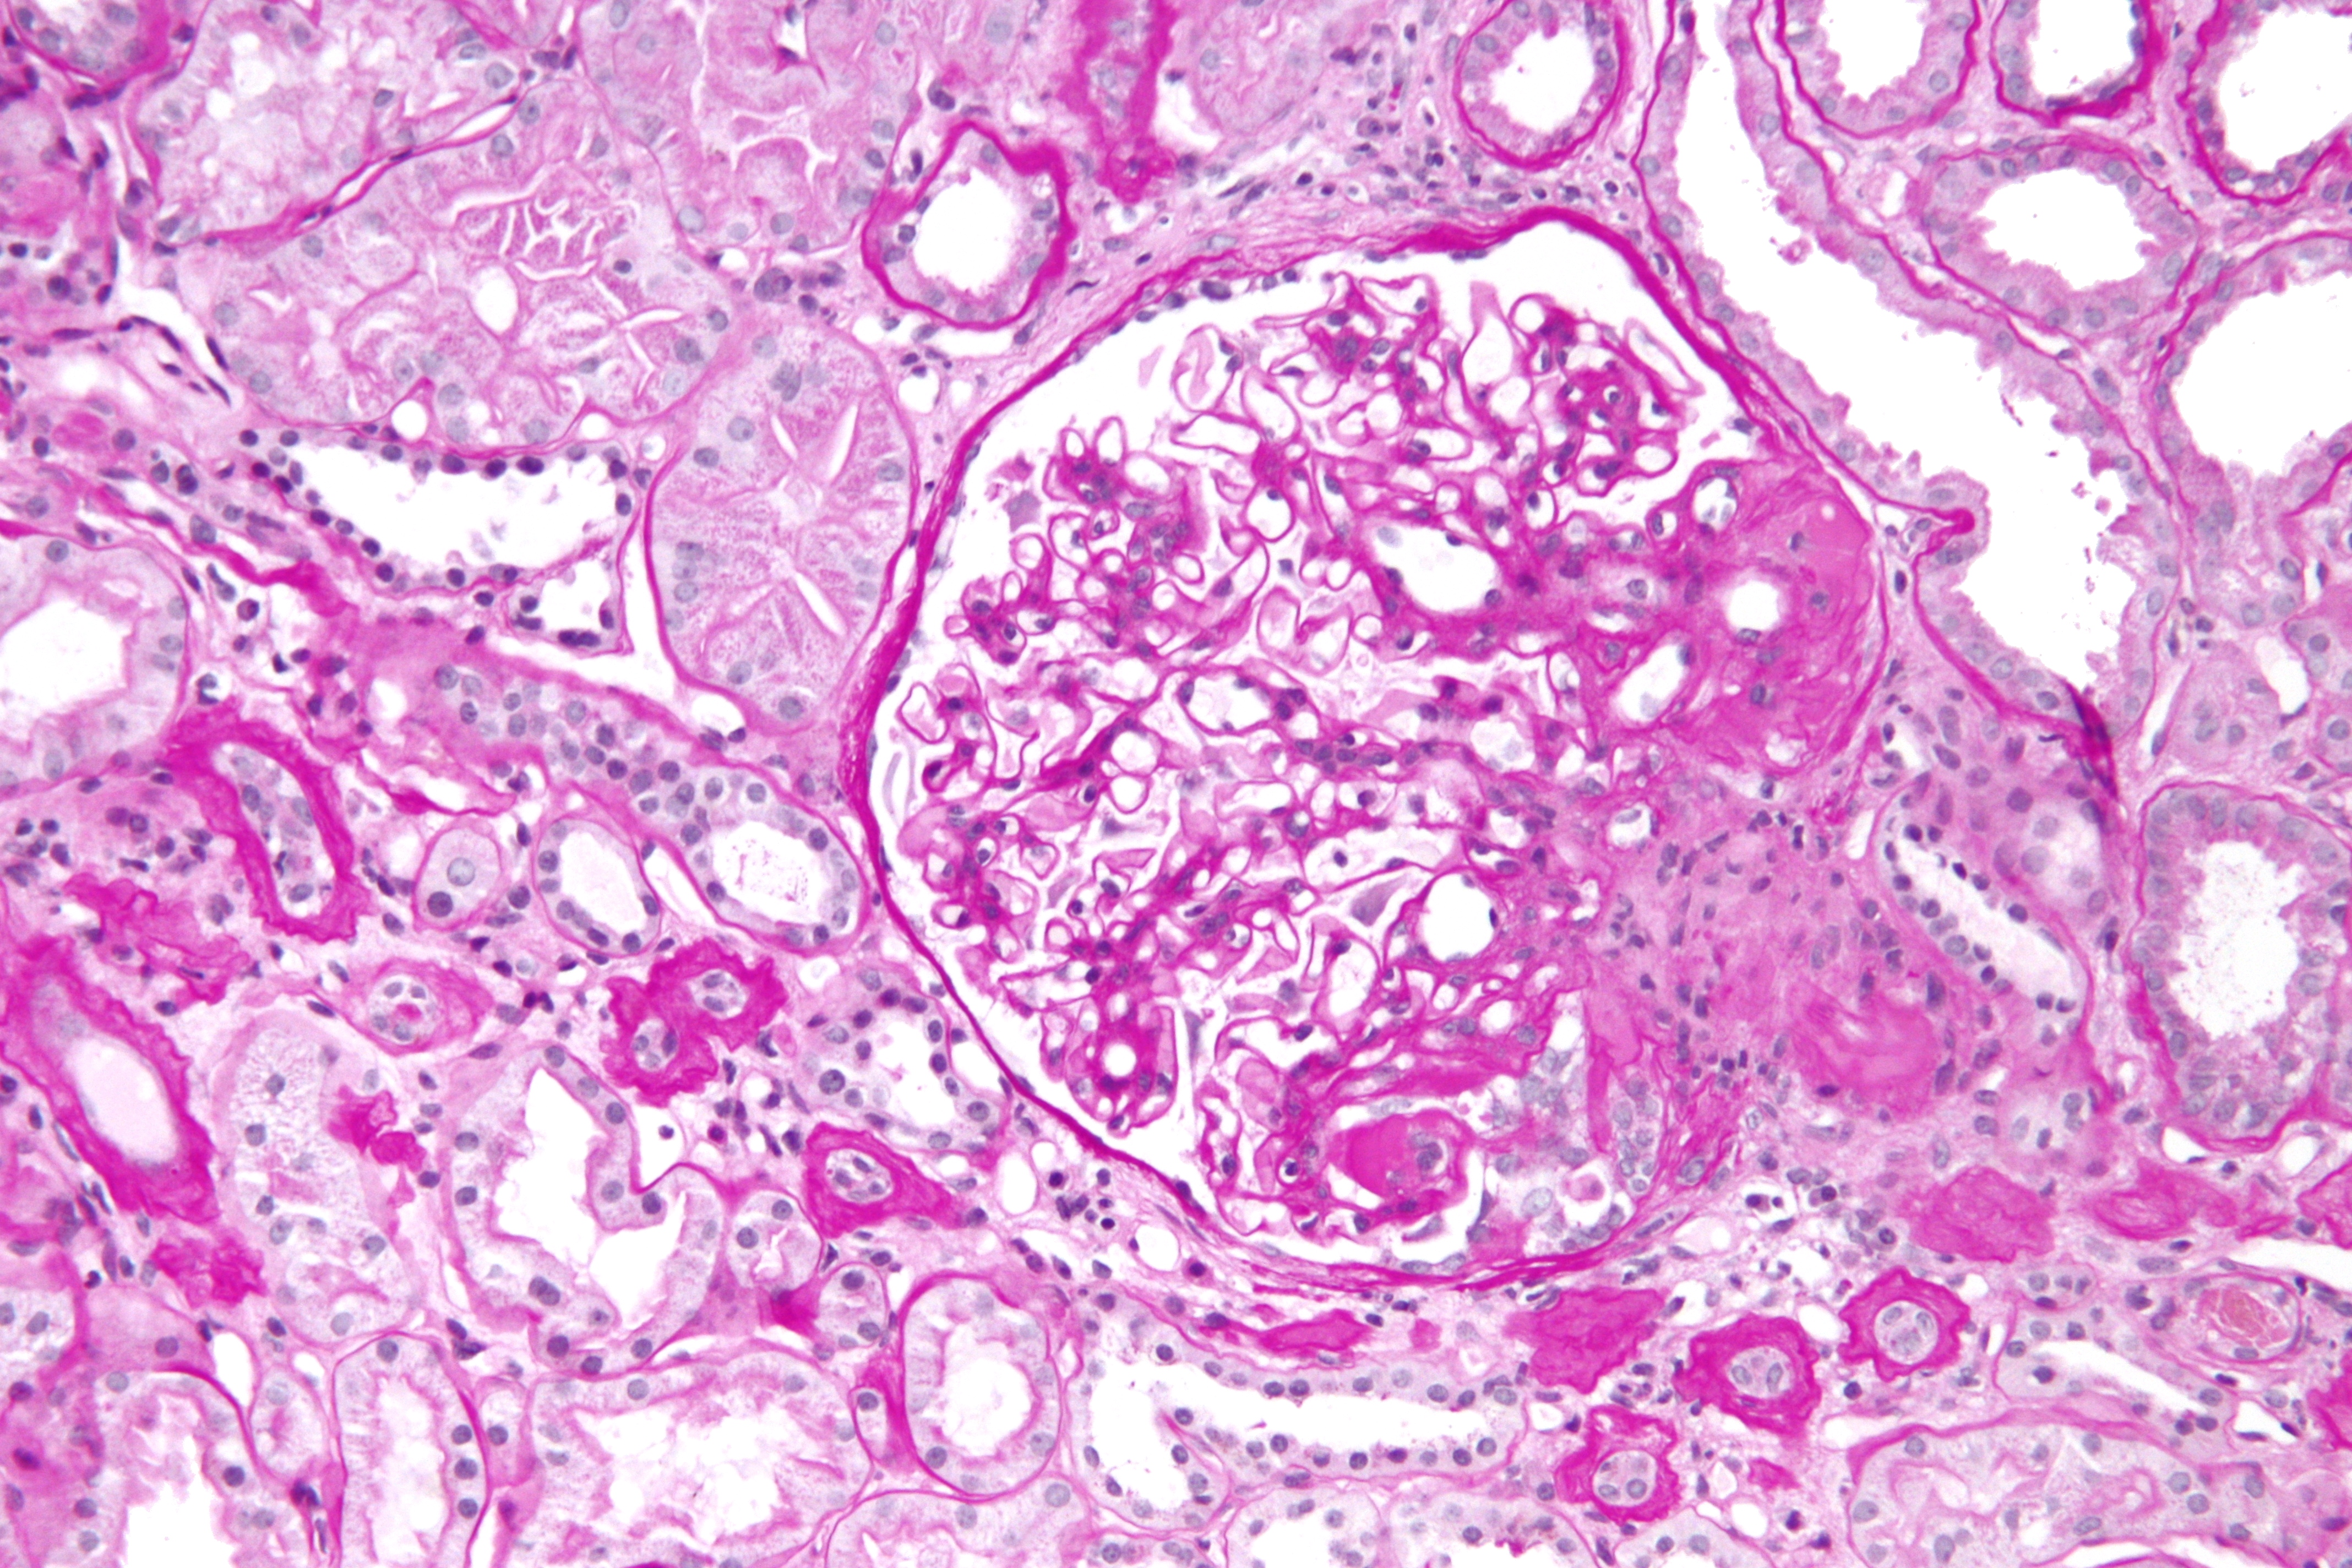 File:Focal segmental glomerulosclerosis - high mag.jpg